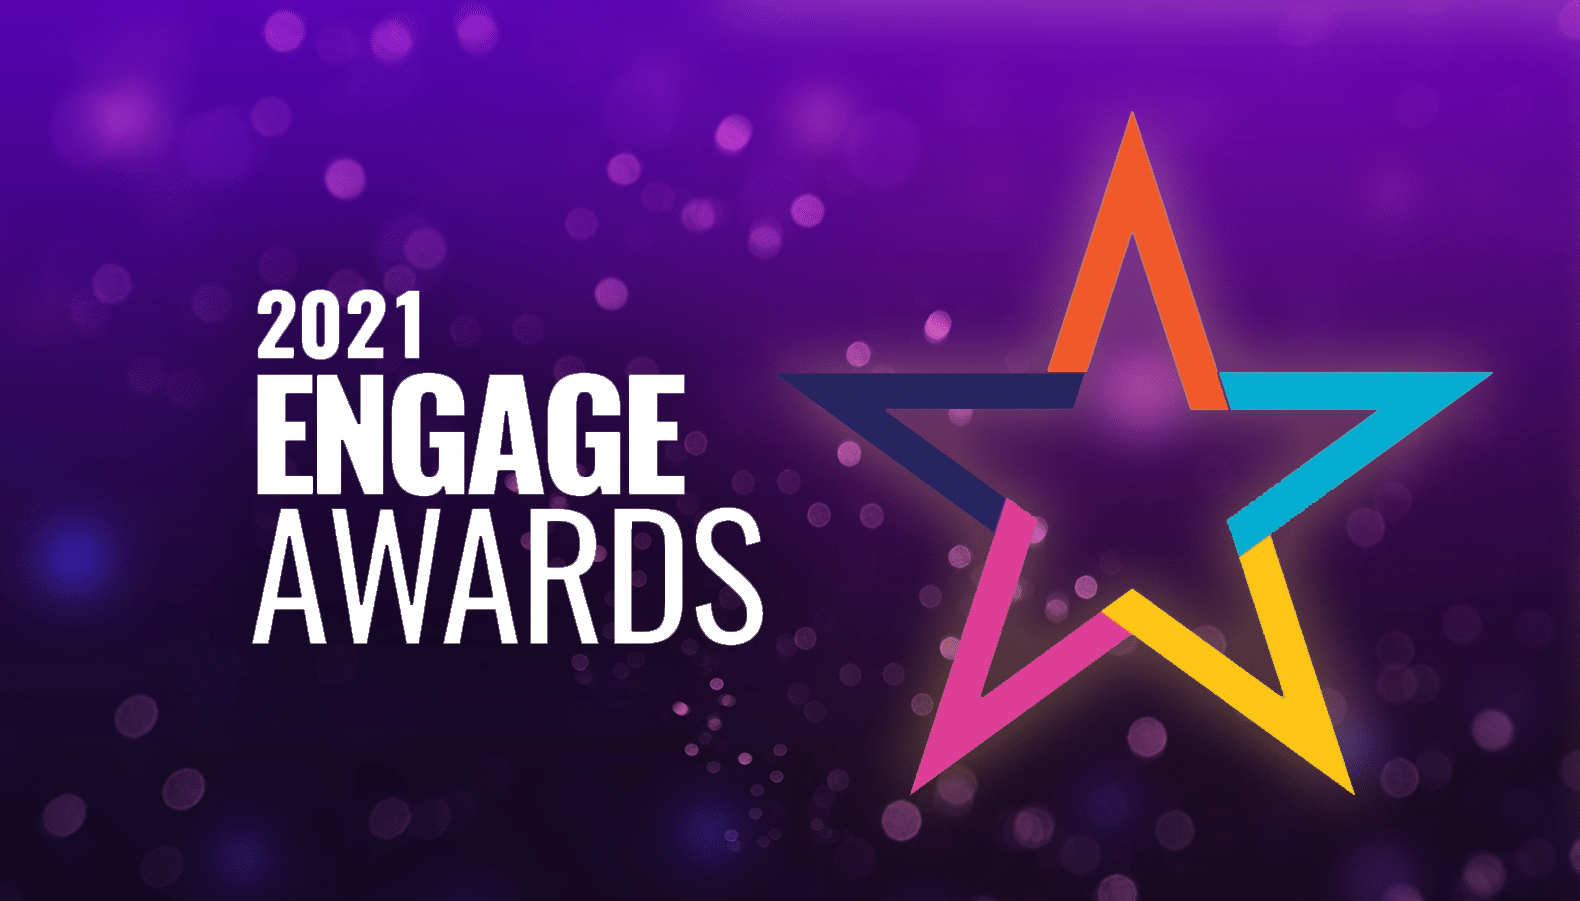 Webhelp win big at the Engage Awards 2021